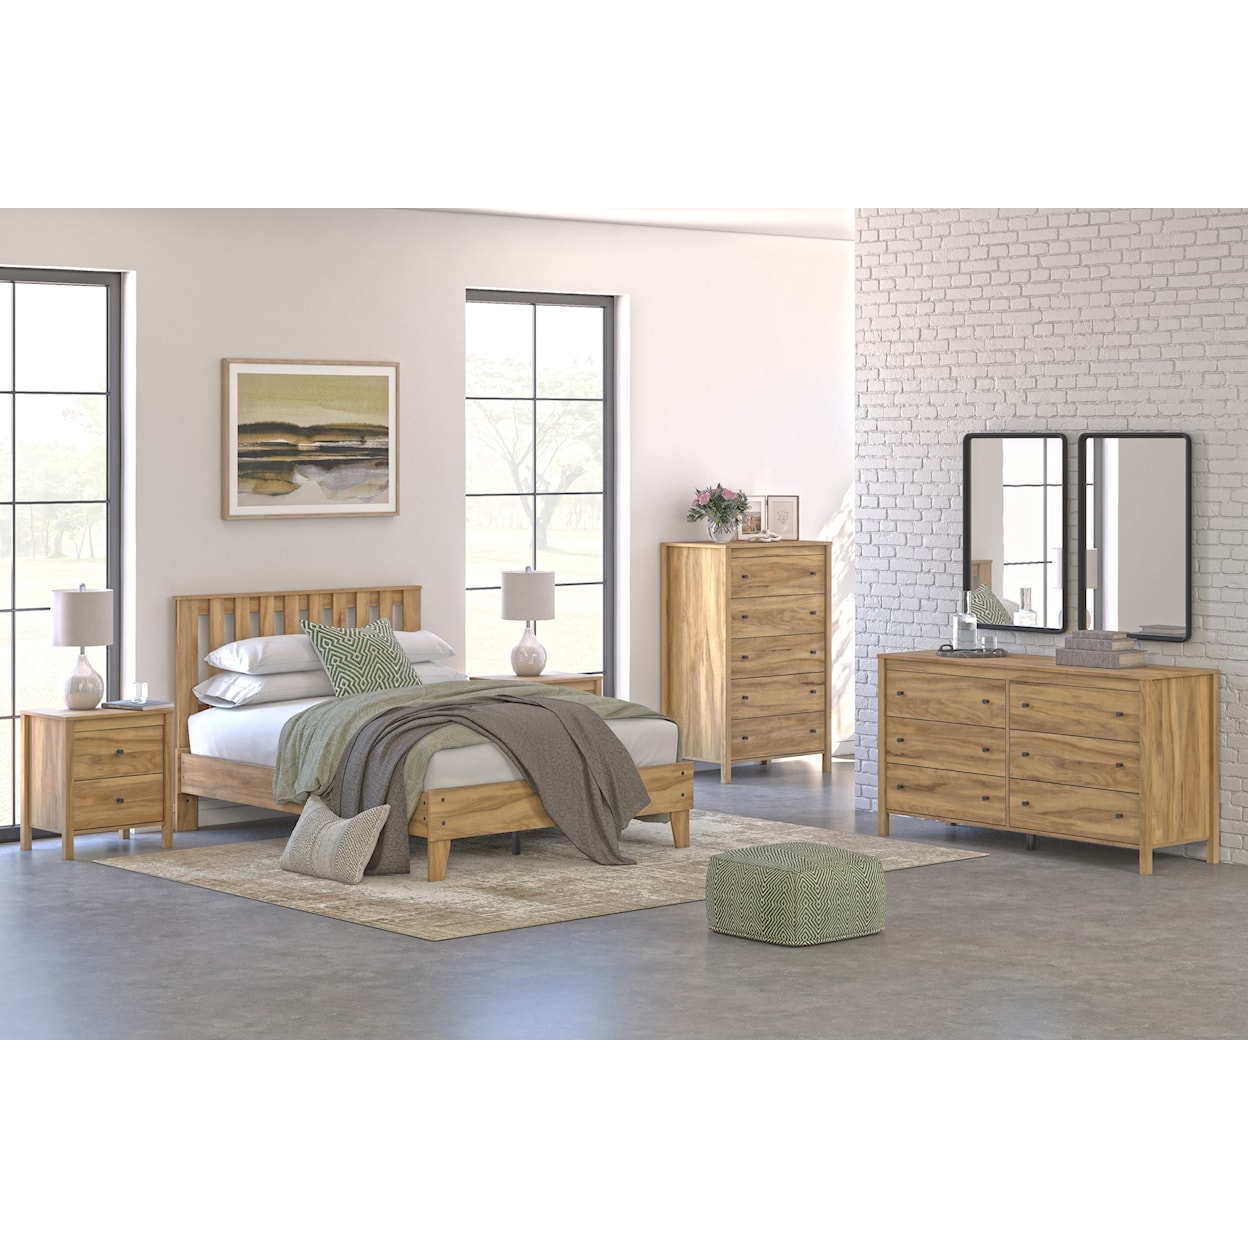 Ashley Furniture Signature Design Bermacy Queen Bedroom Set